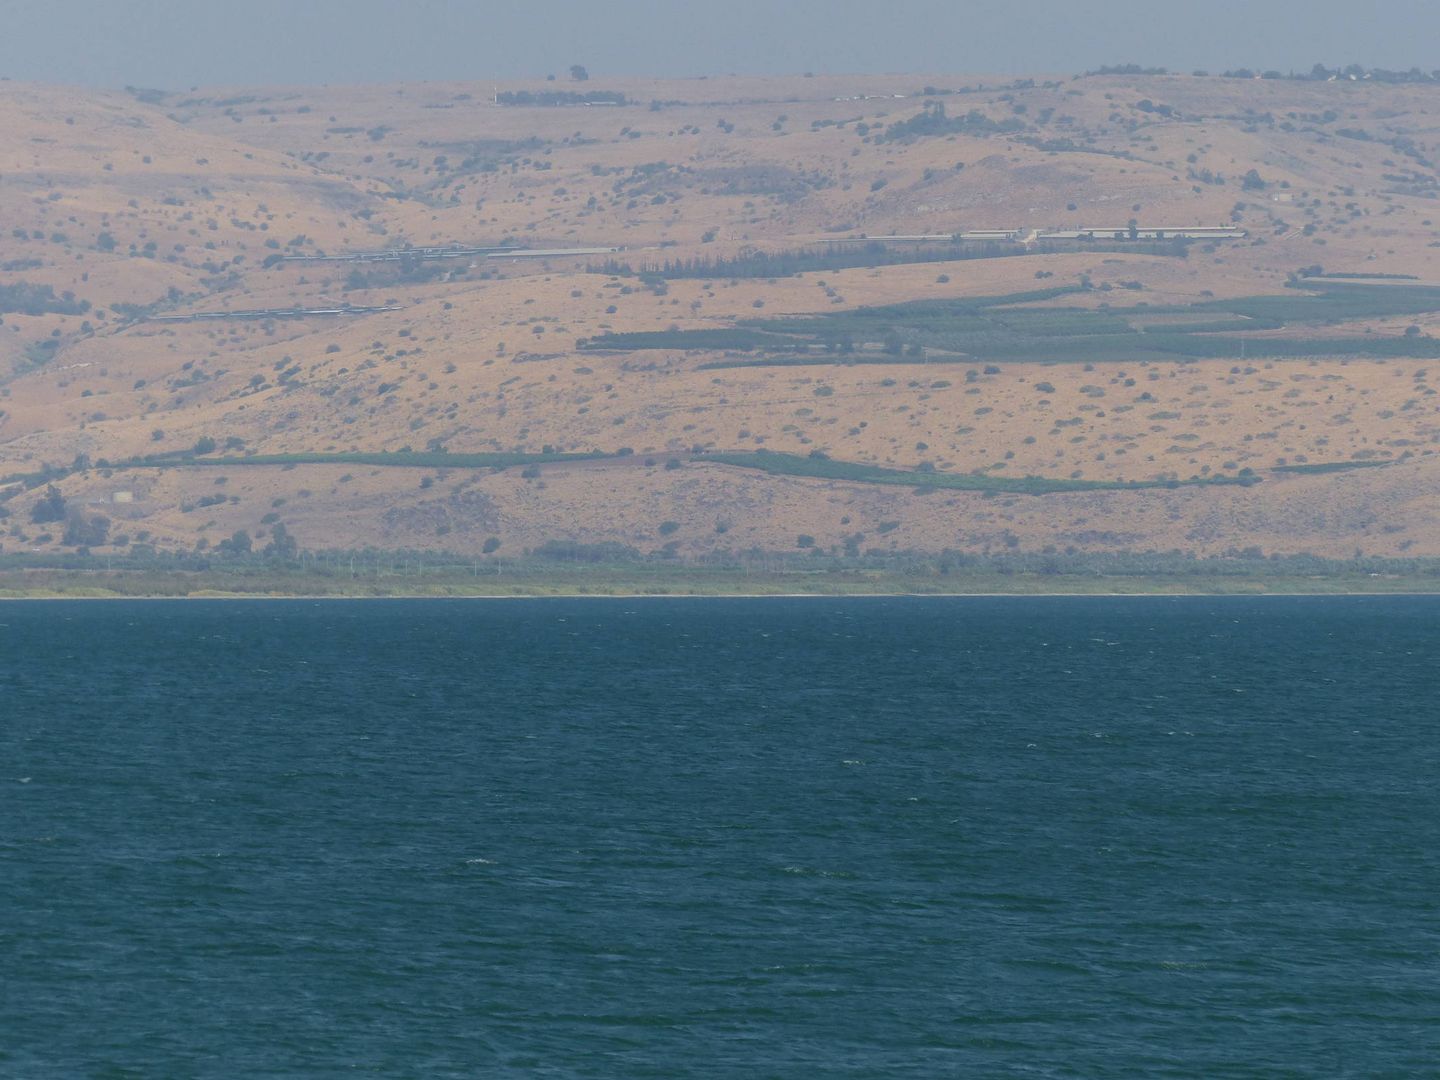 Mar de Galilea. (Wikimedia Commons)